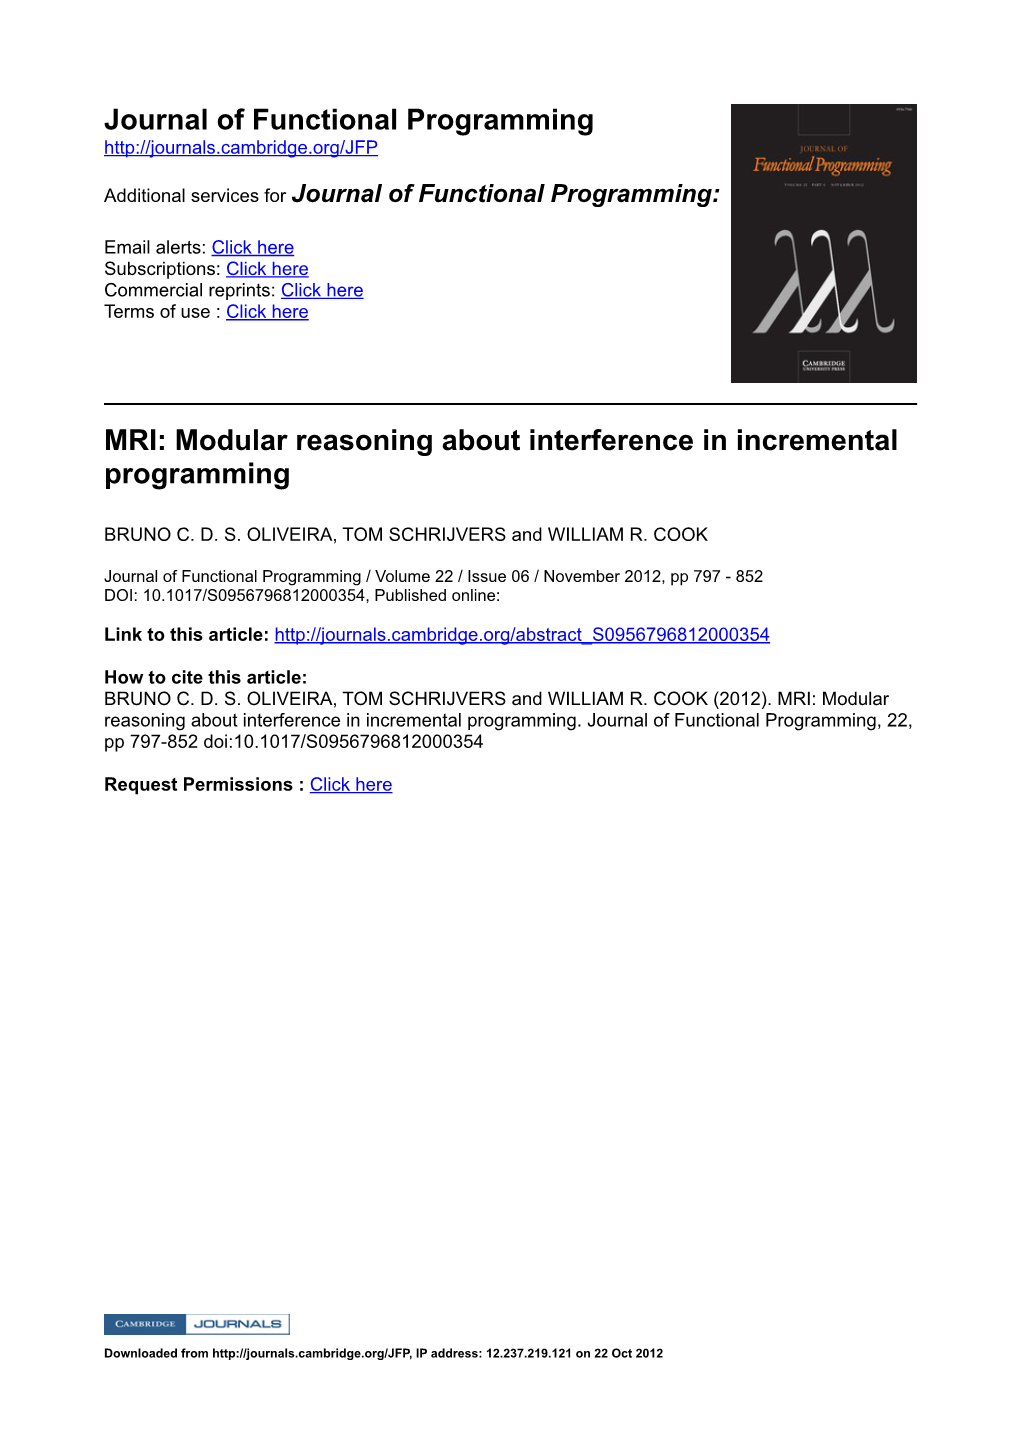 Modular Reasoning About Interference in Incremental Programming